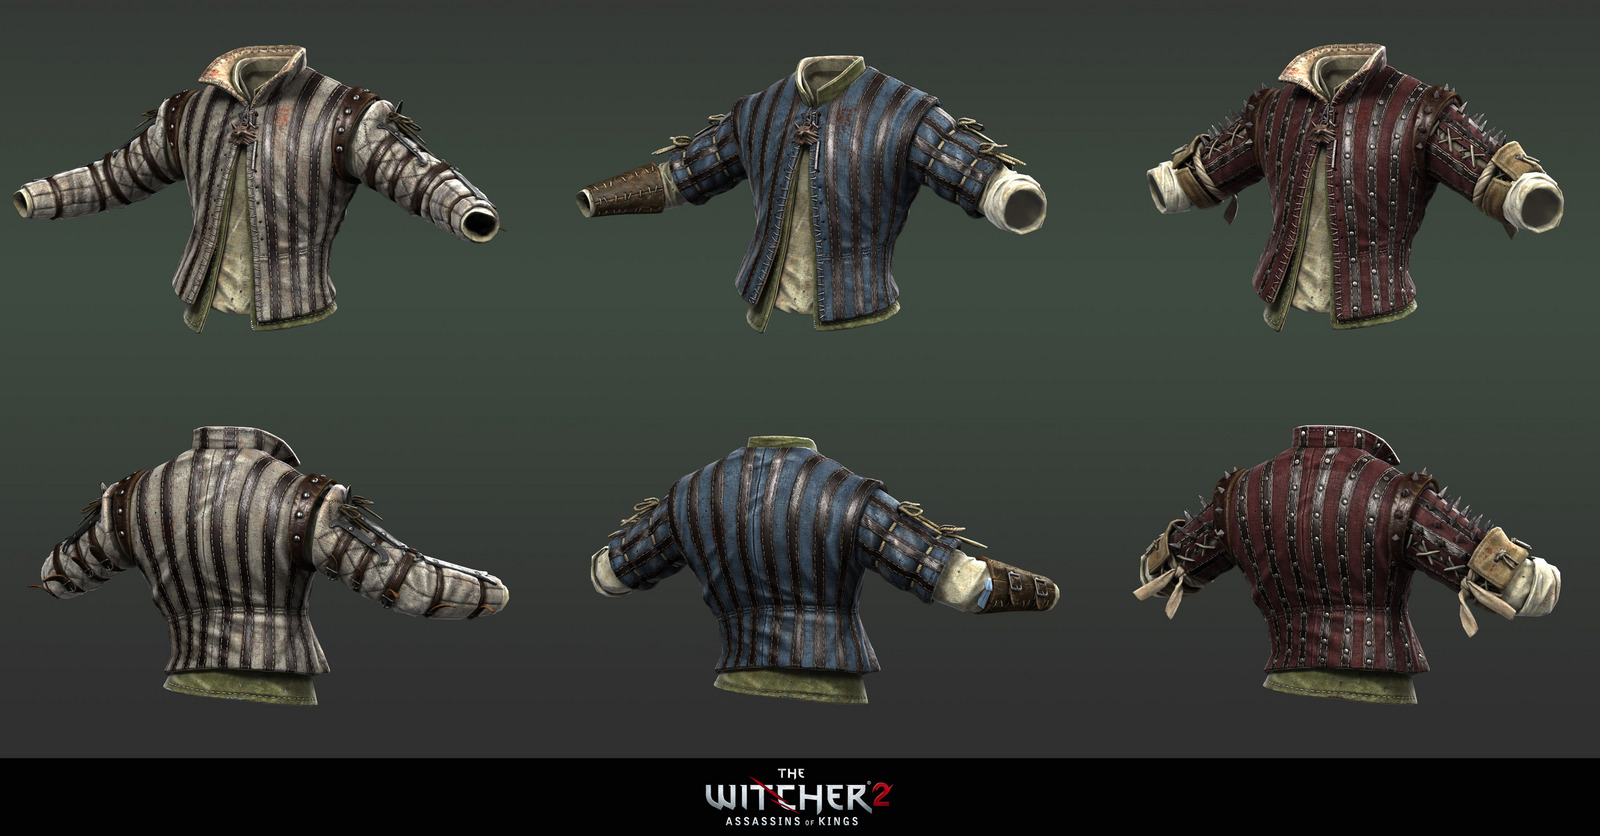 Witcher 2 Gear - The Witcher 3: Wild Hunt Mods